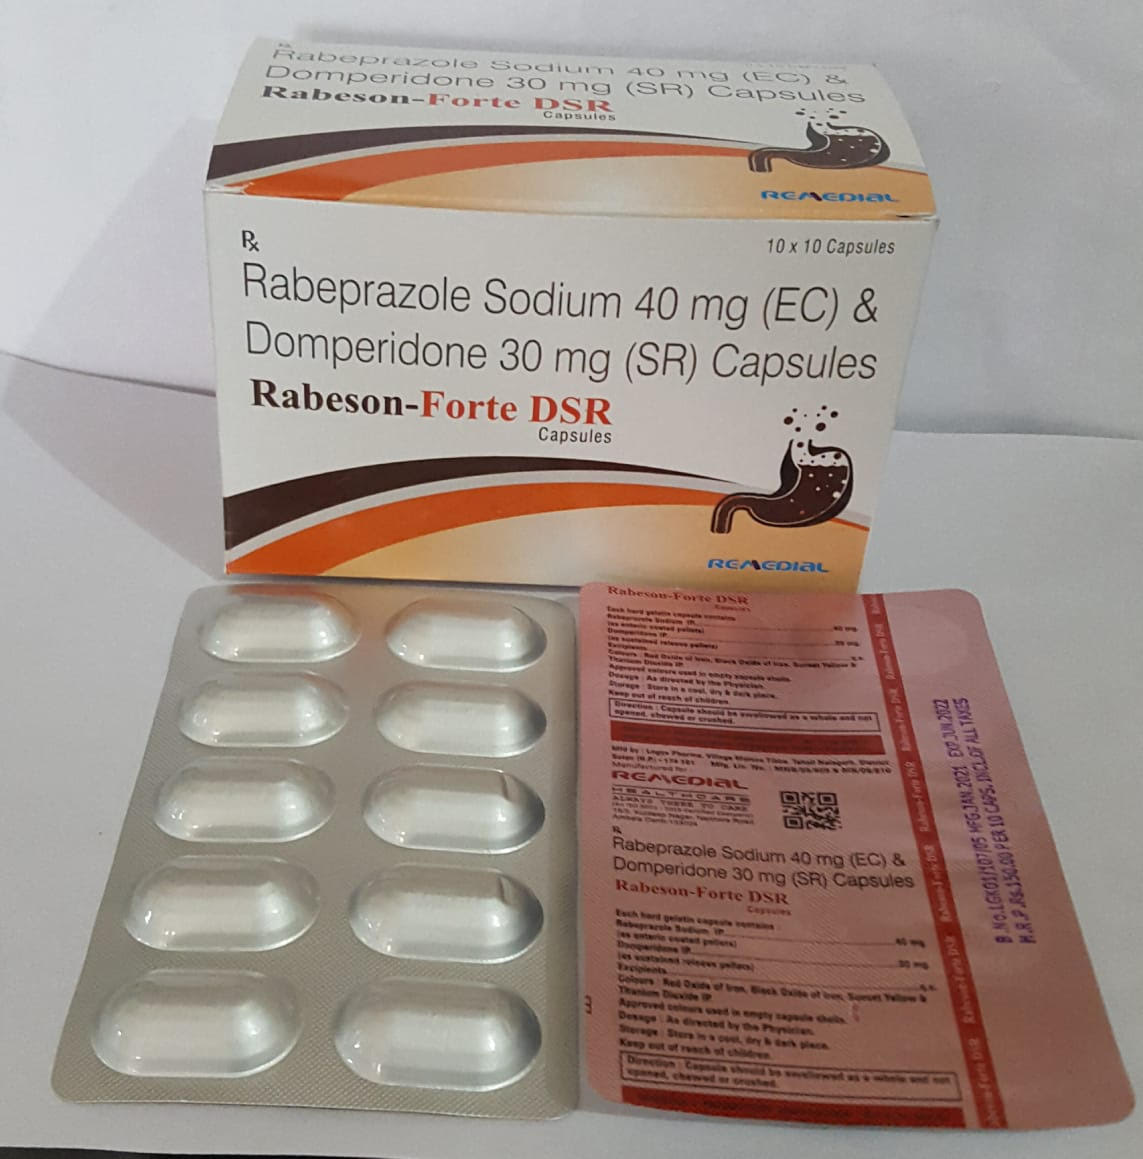 RABESON-FORTE DSR (Rabeprazole Sodium 40 mg (EC) & Domperidone 30 mg SR Caps)